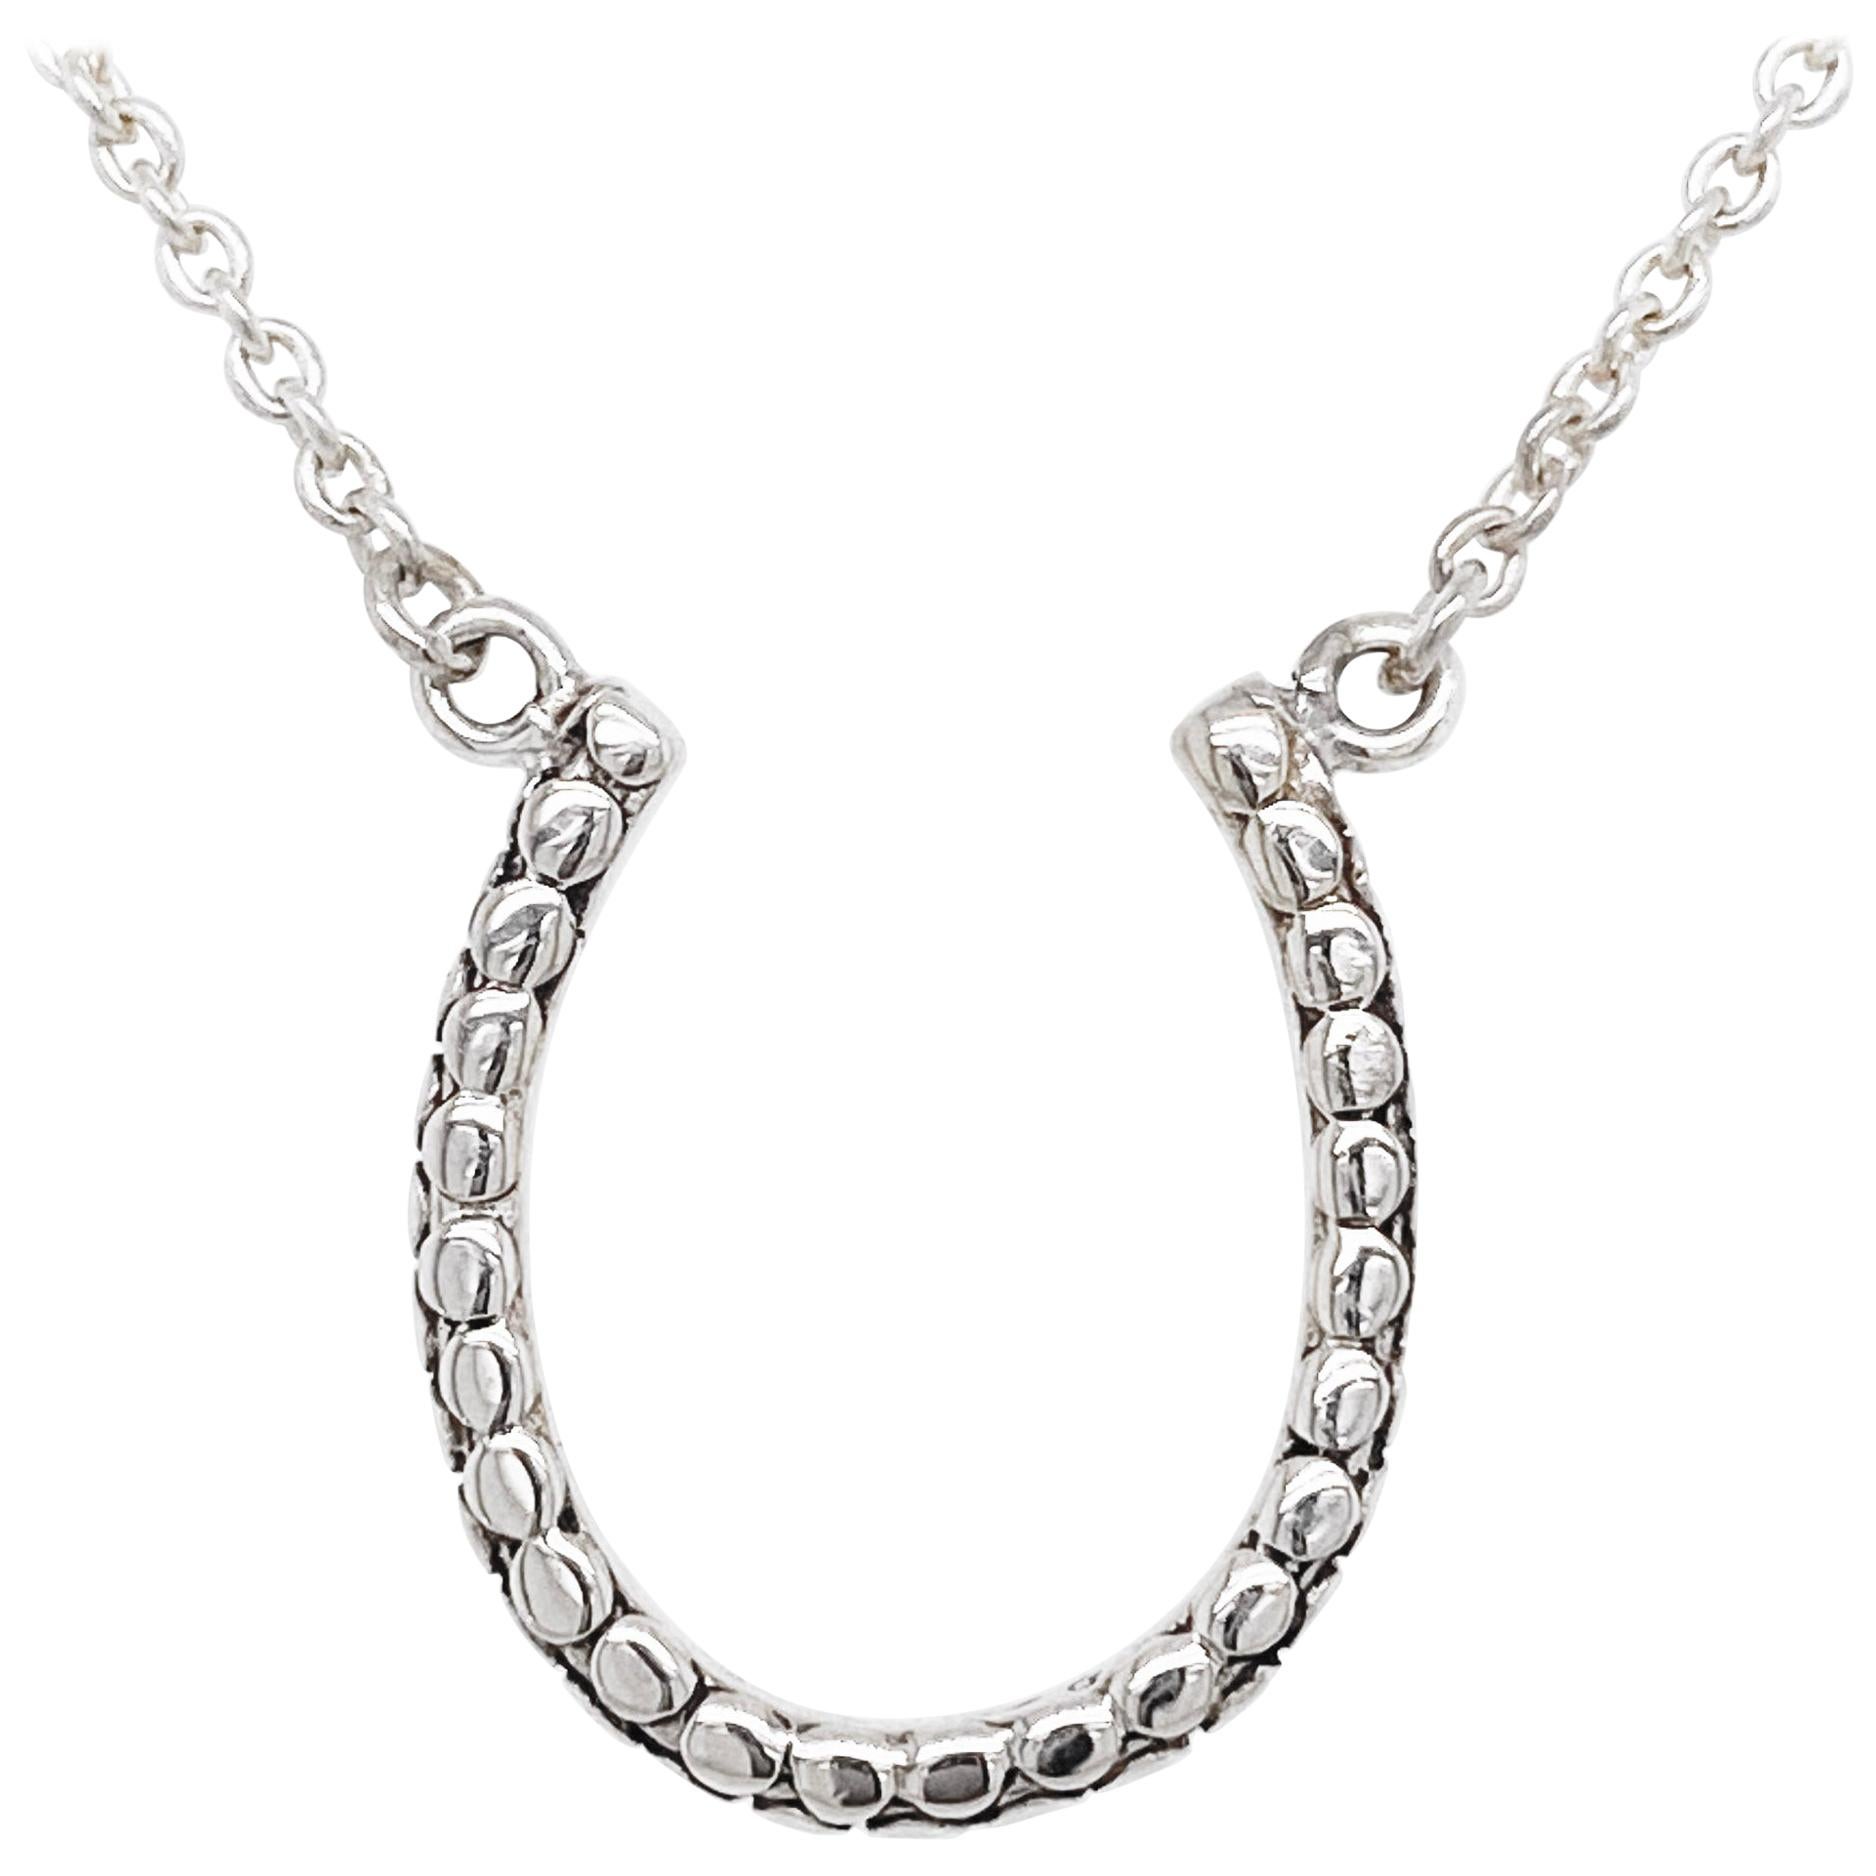 Horseshoe Necklace, Sterling Silver, Horseshoe Pendant, Textured, Good Luck